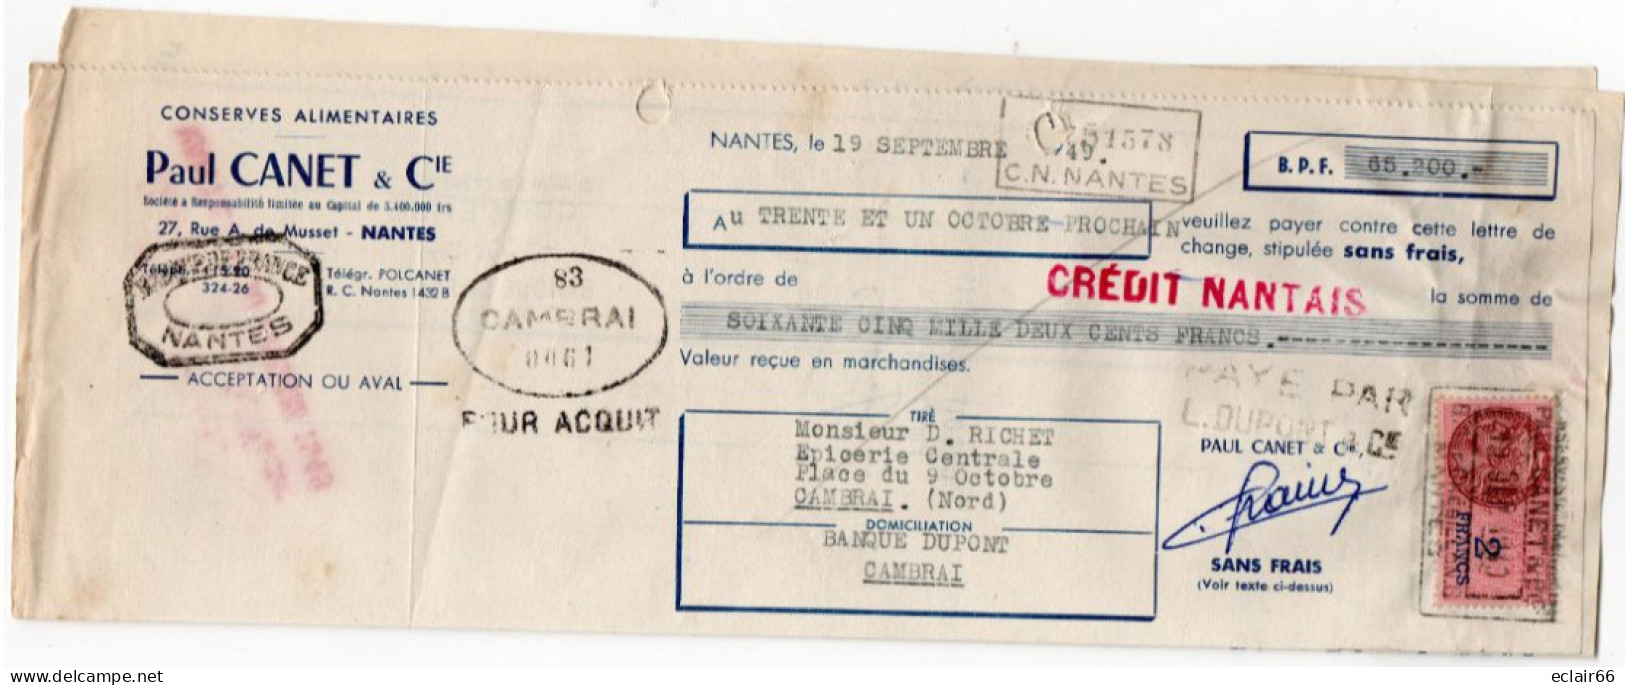 3 Documents Factures NANTES 1949 Conserves Alimentaires PAUL CANET Conserverie COQUILLES ST JACQUES - Alimentaire